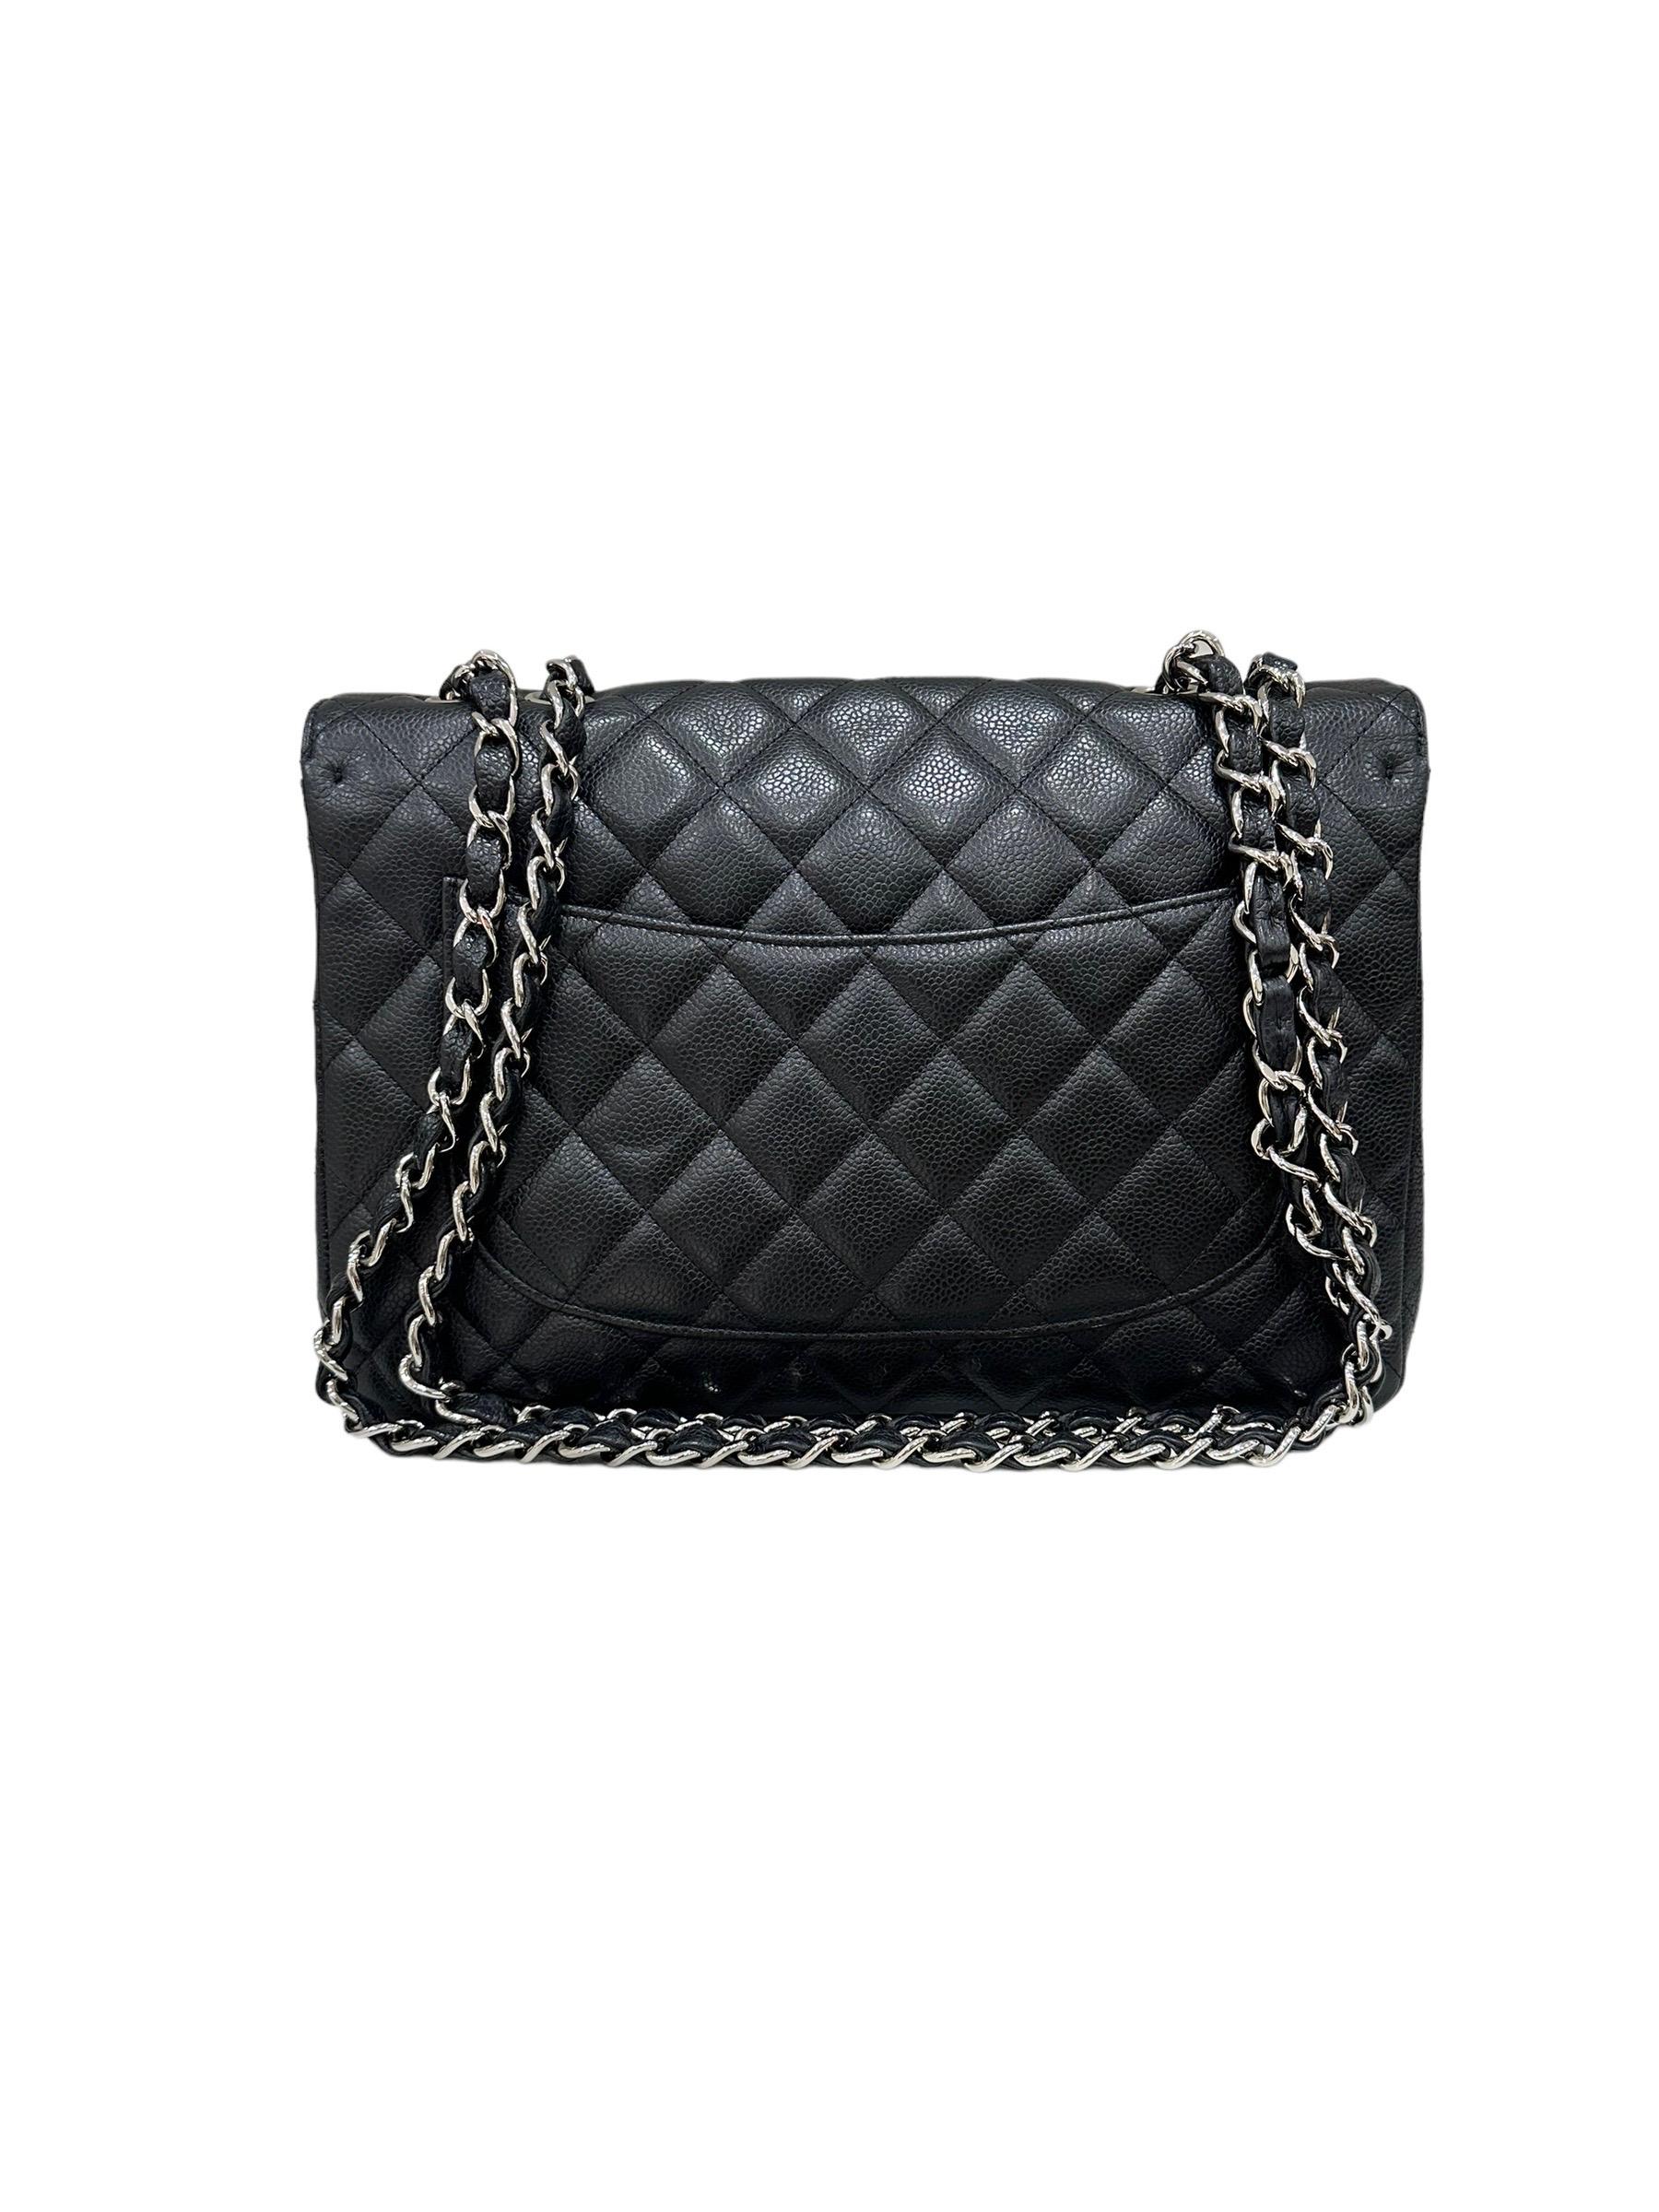 2009 Chanel Jumbo Black Caviar Leather Top Shoulder Bag  For Sale 3